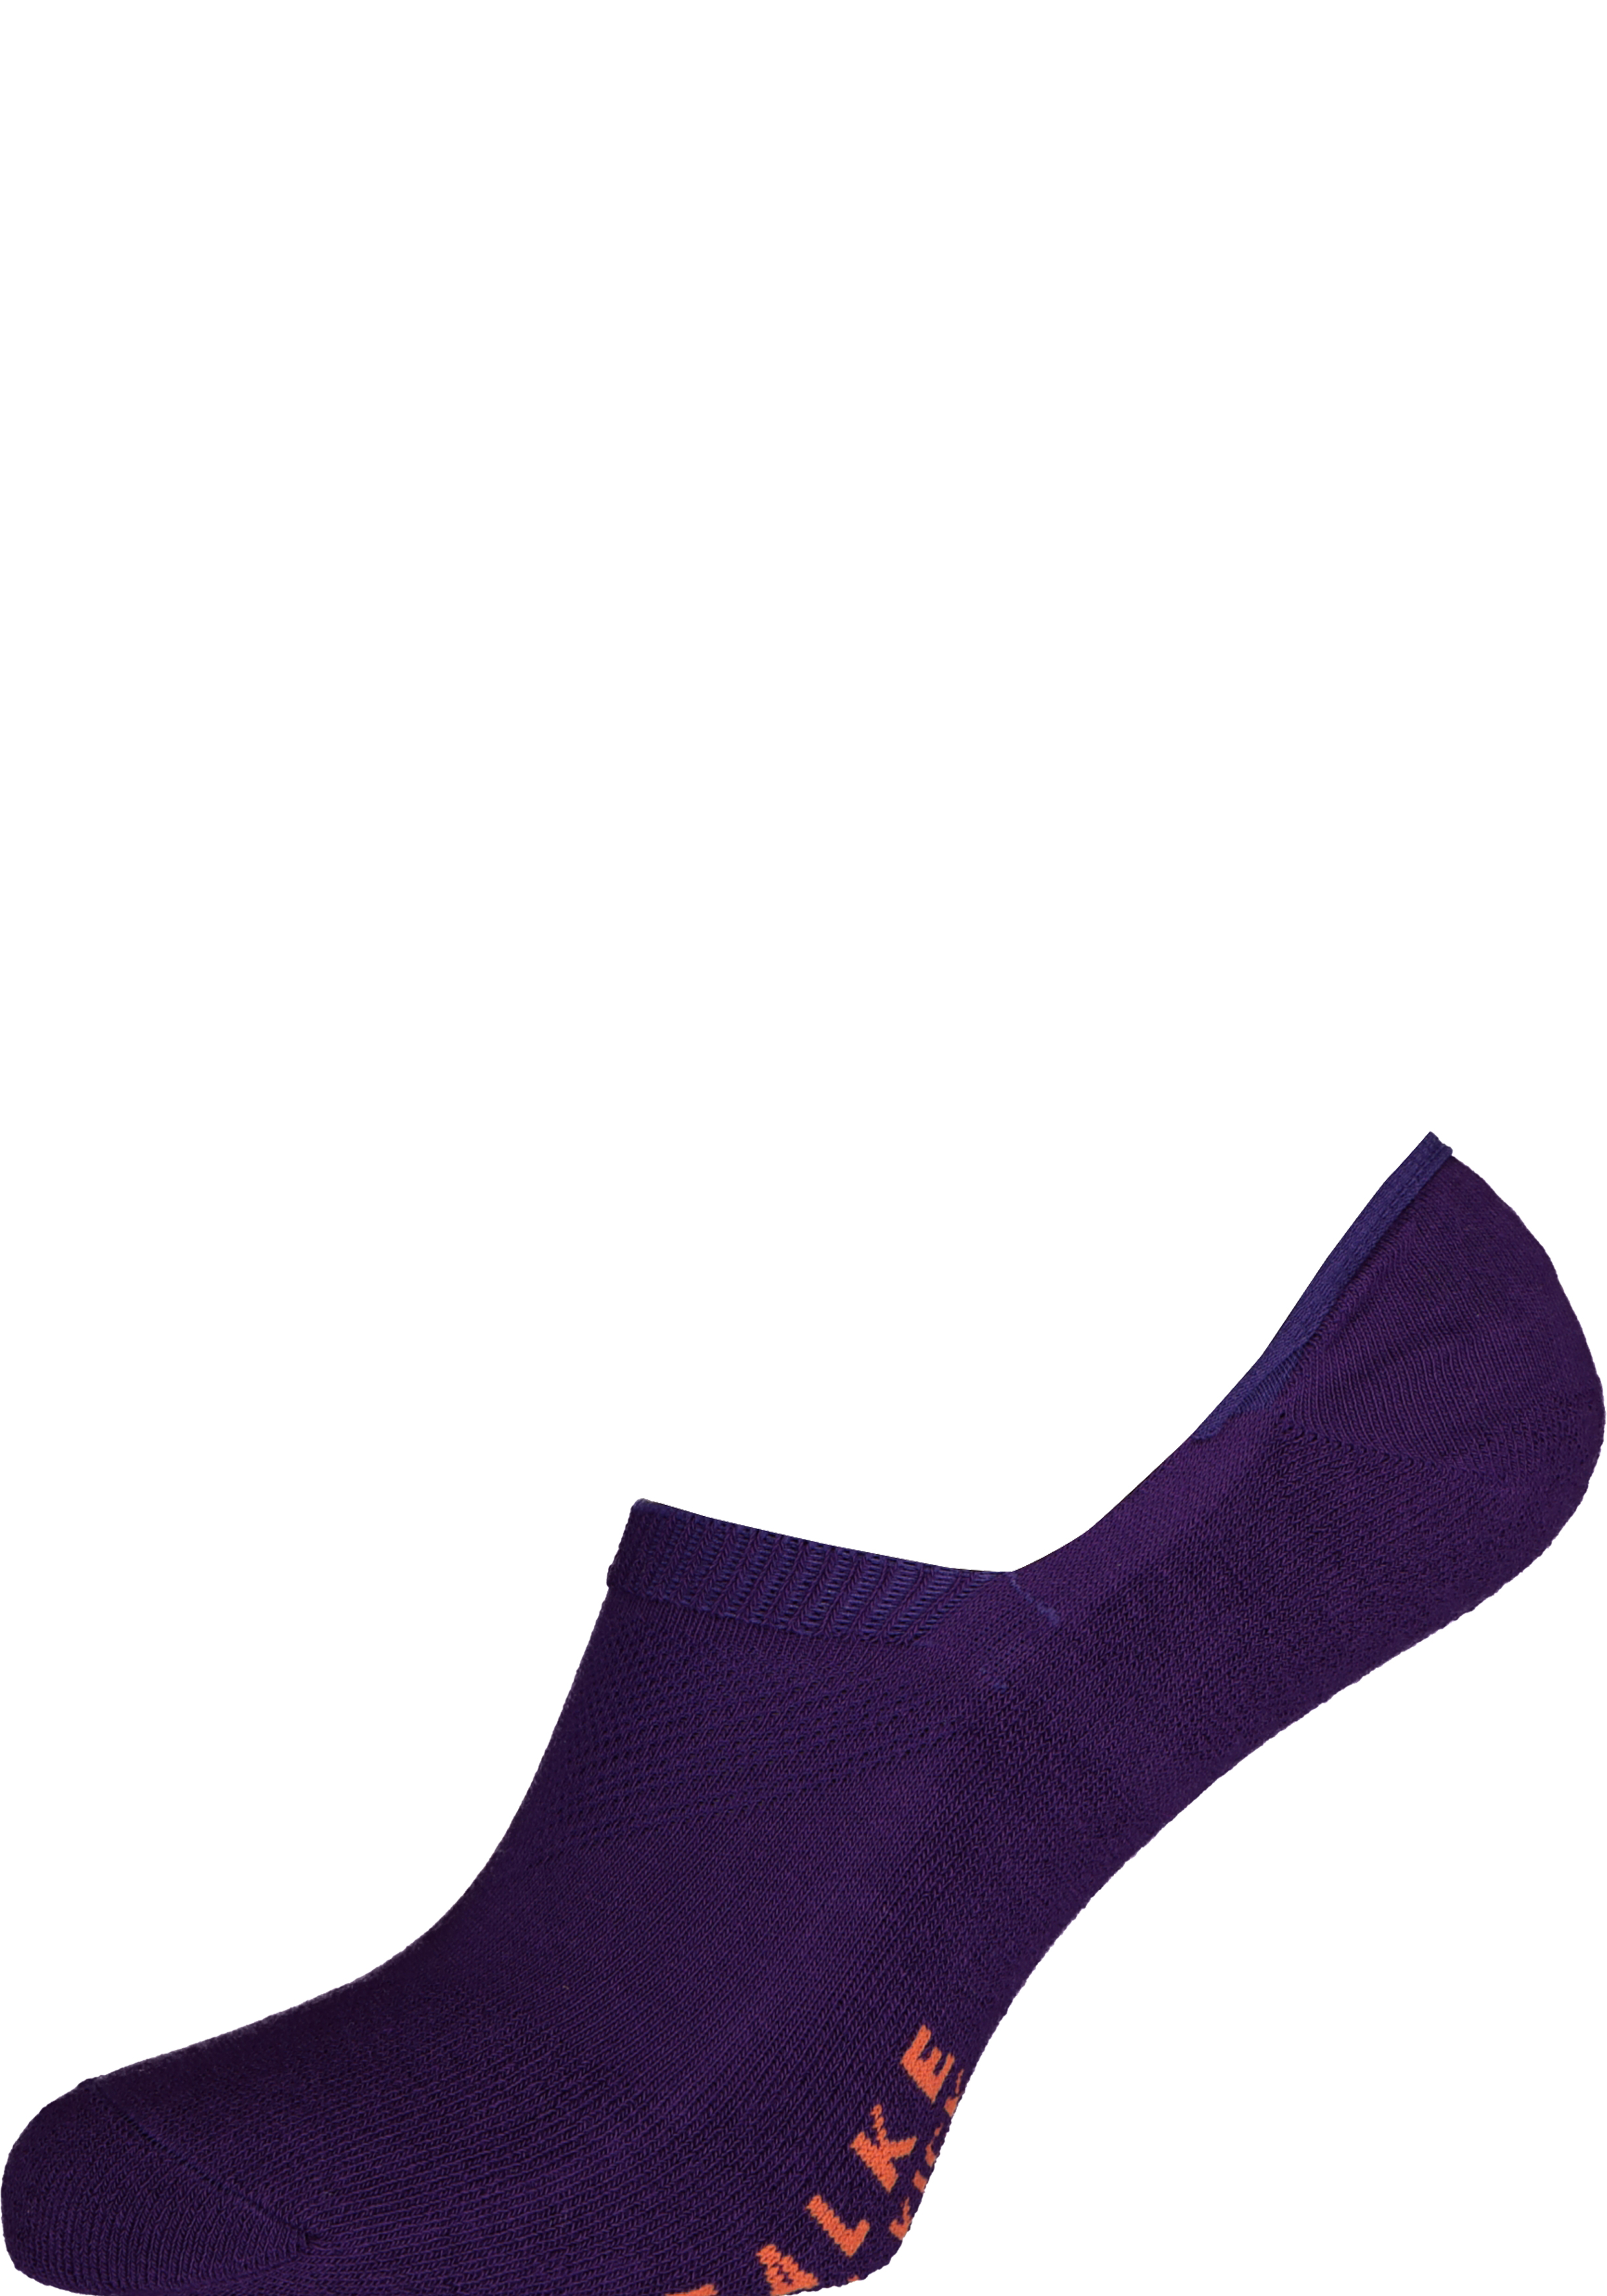 FALKE Cool Kick invisible unisex sokken, paars (petunia)